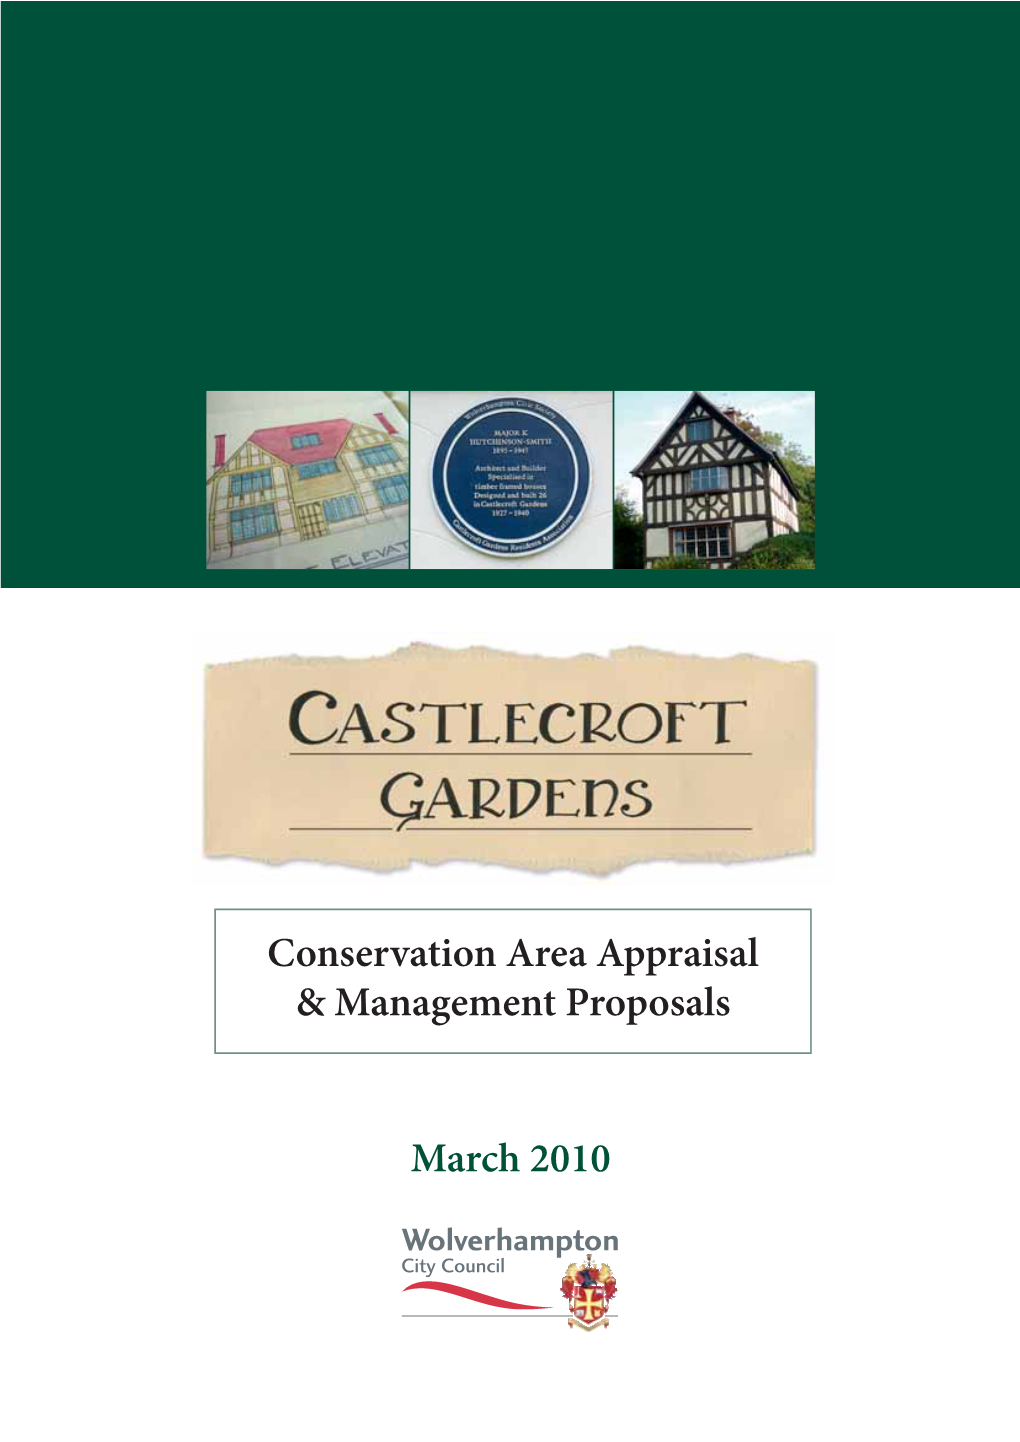 Conservation Area Appraisal & Management Proposals March 2010